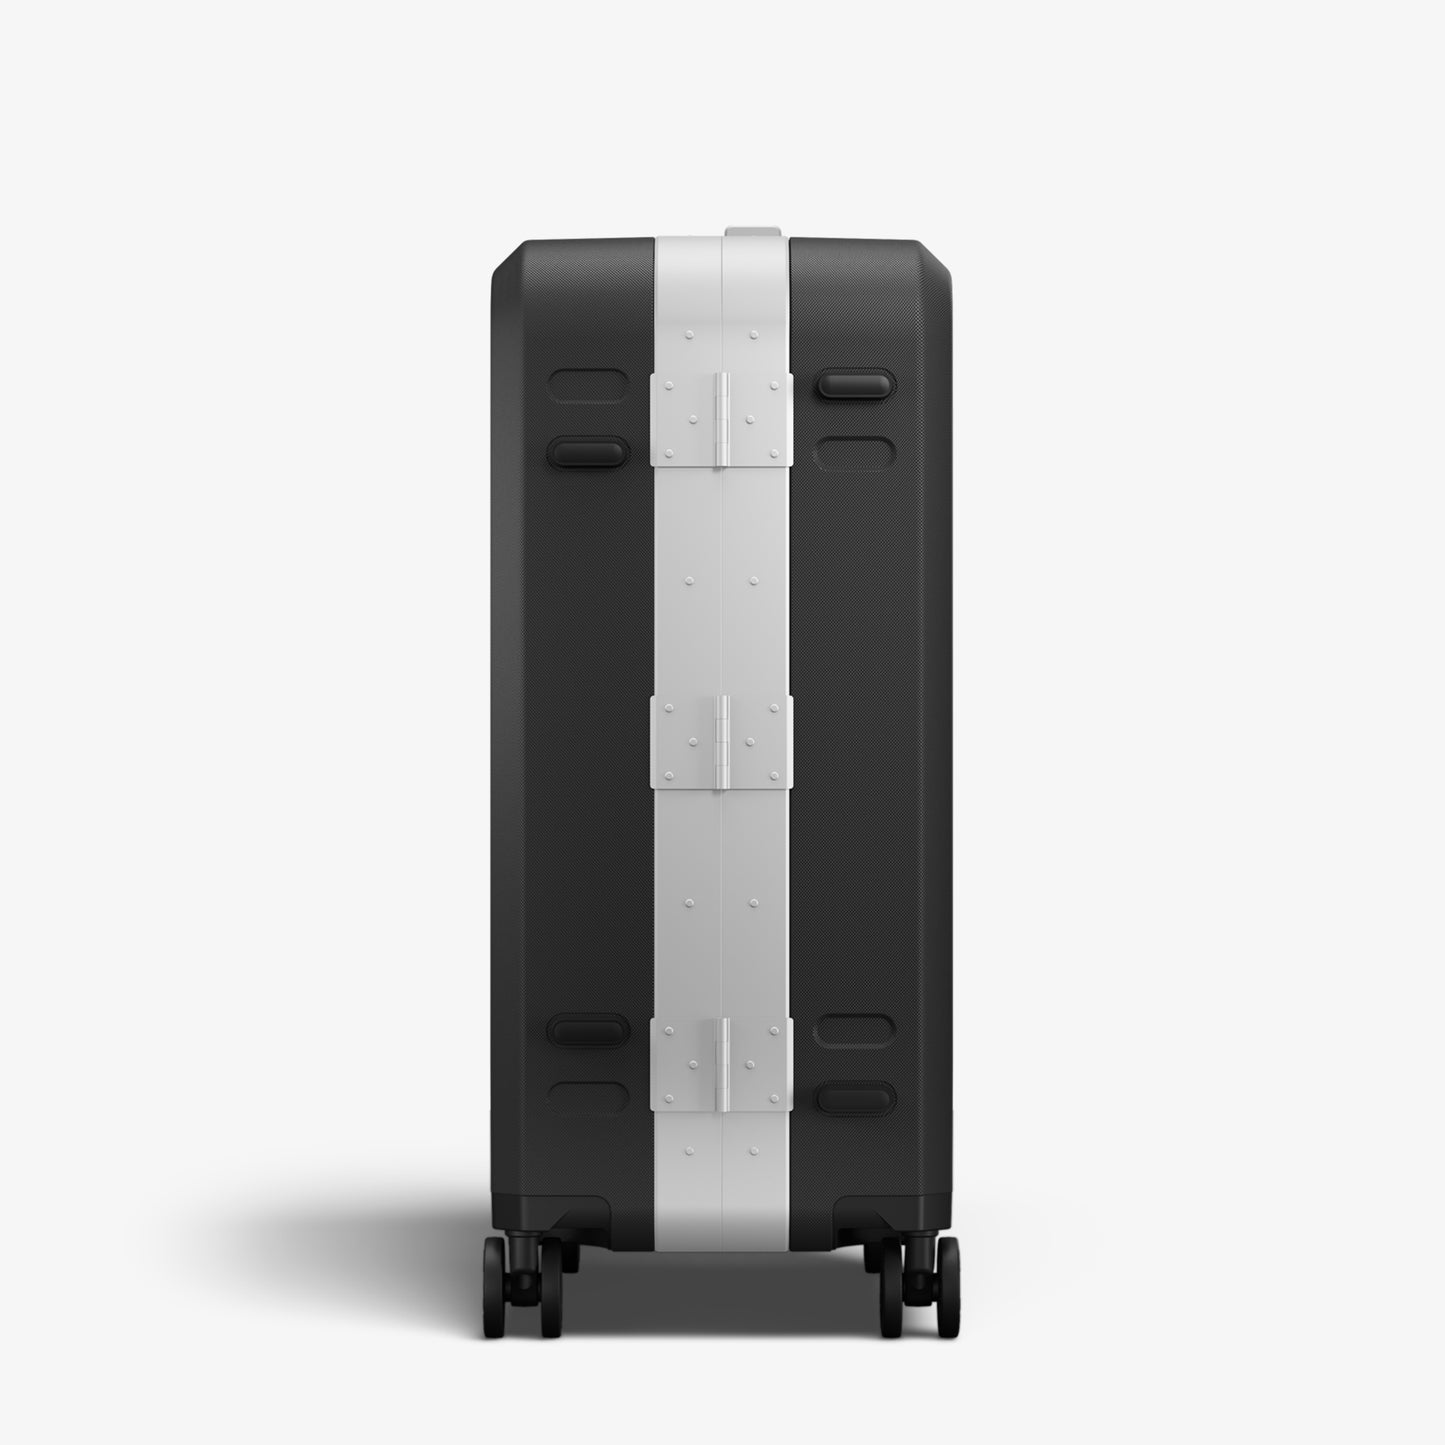 Ramverk Pro Check-in Luggage Medium Silver